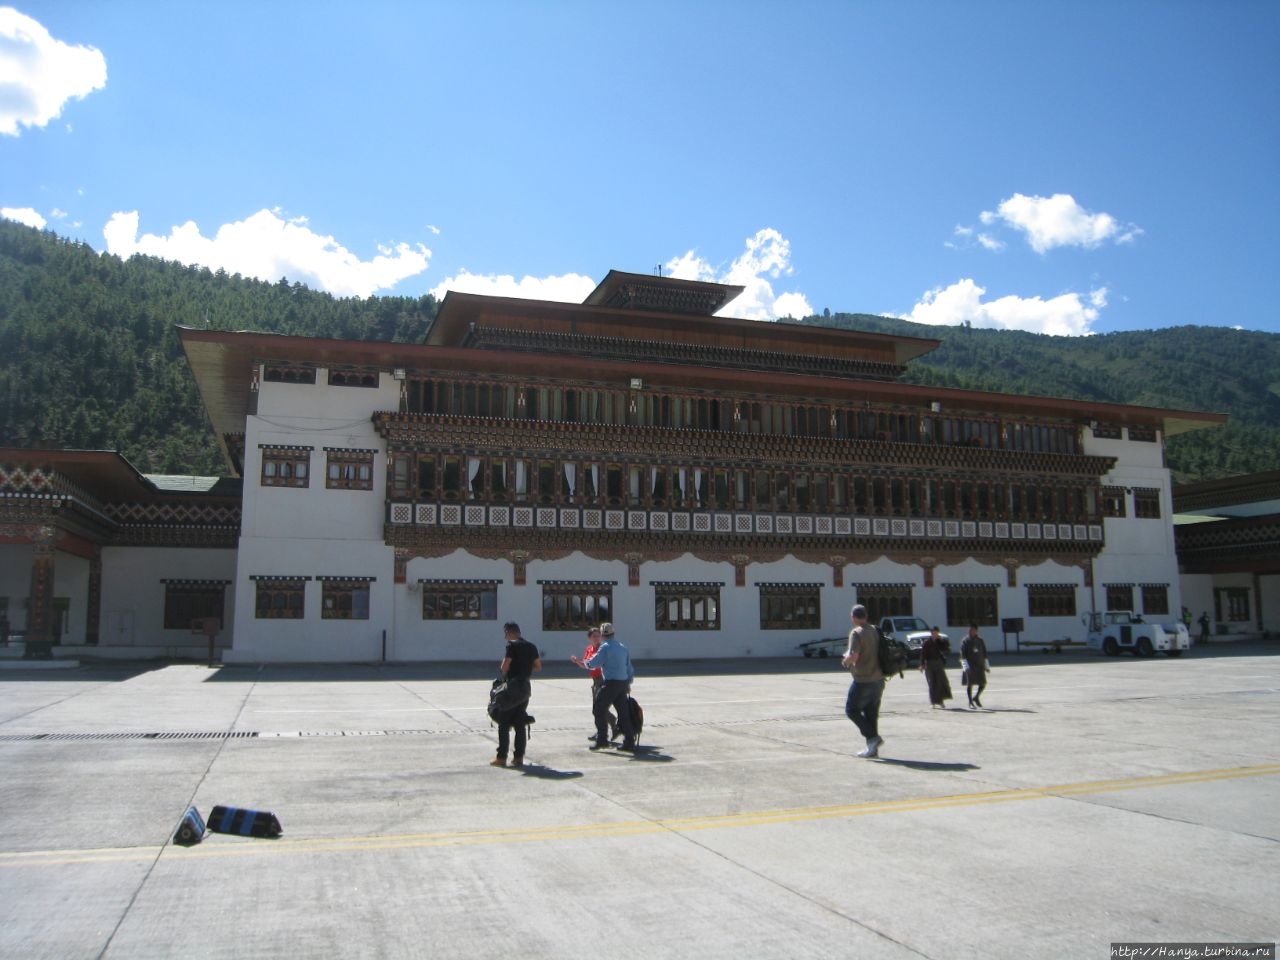 Интернациональный аэропорт Паро Паро, Бутан